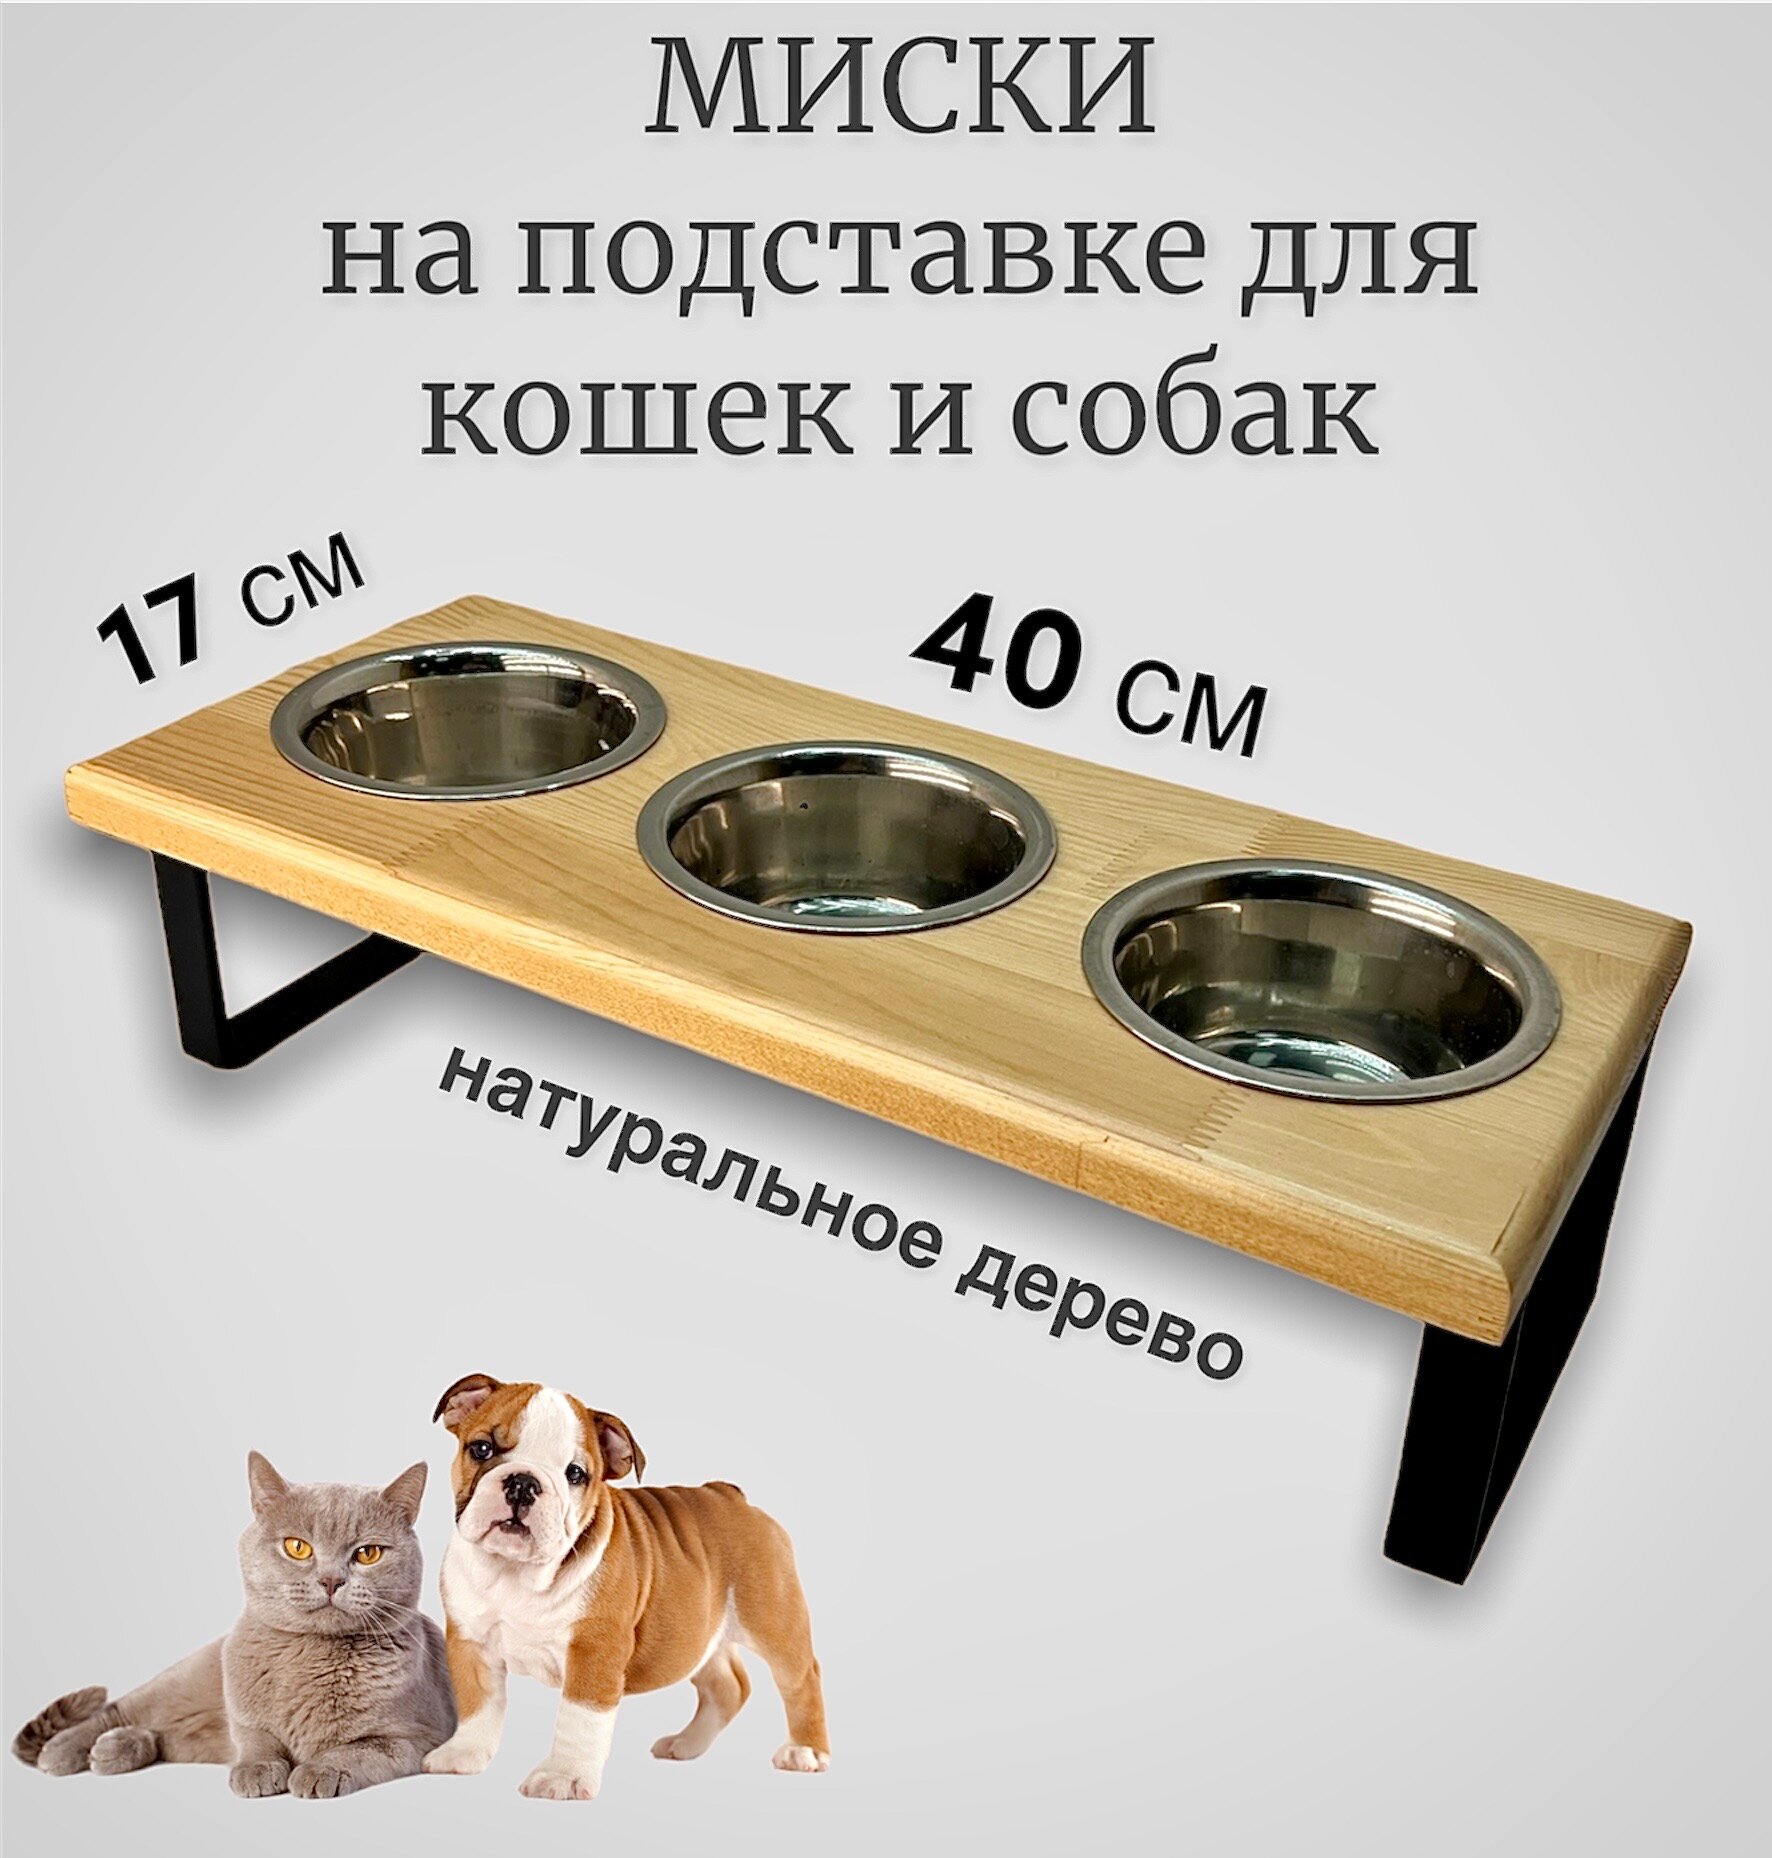 Миски на подставке для собак и кошек (Мисочница), 40х17х12 см - фотография № 1